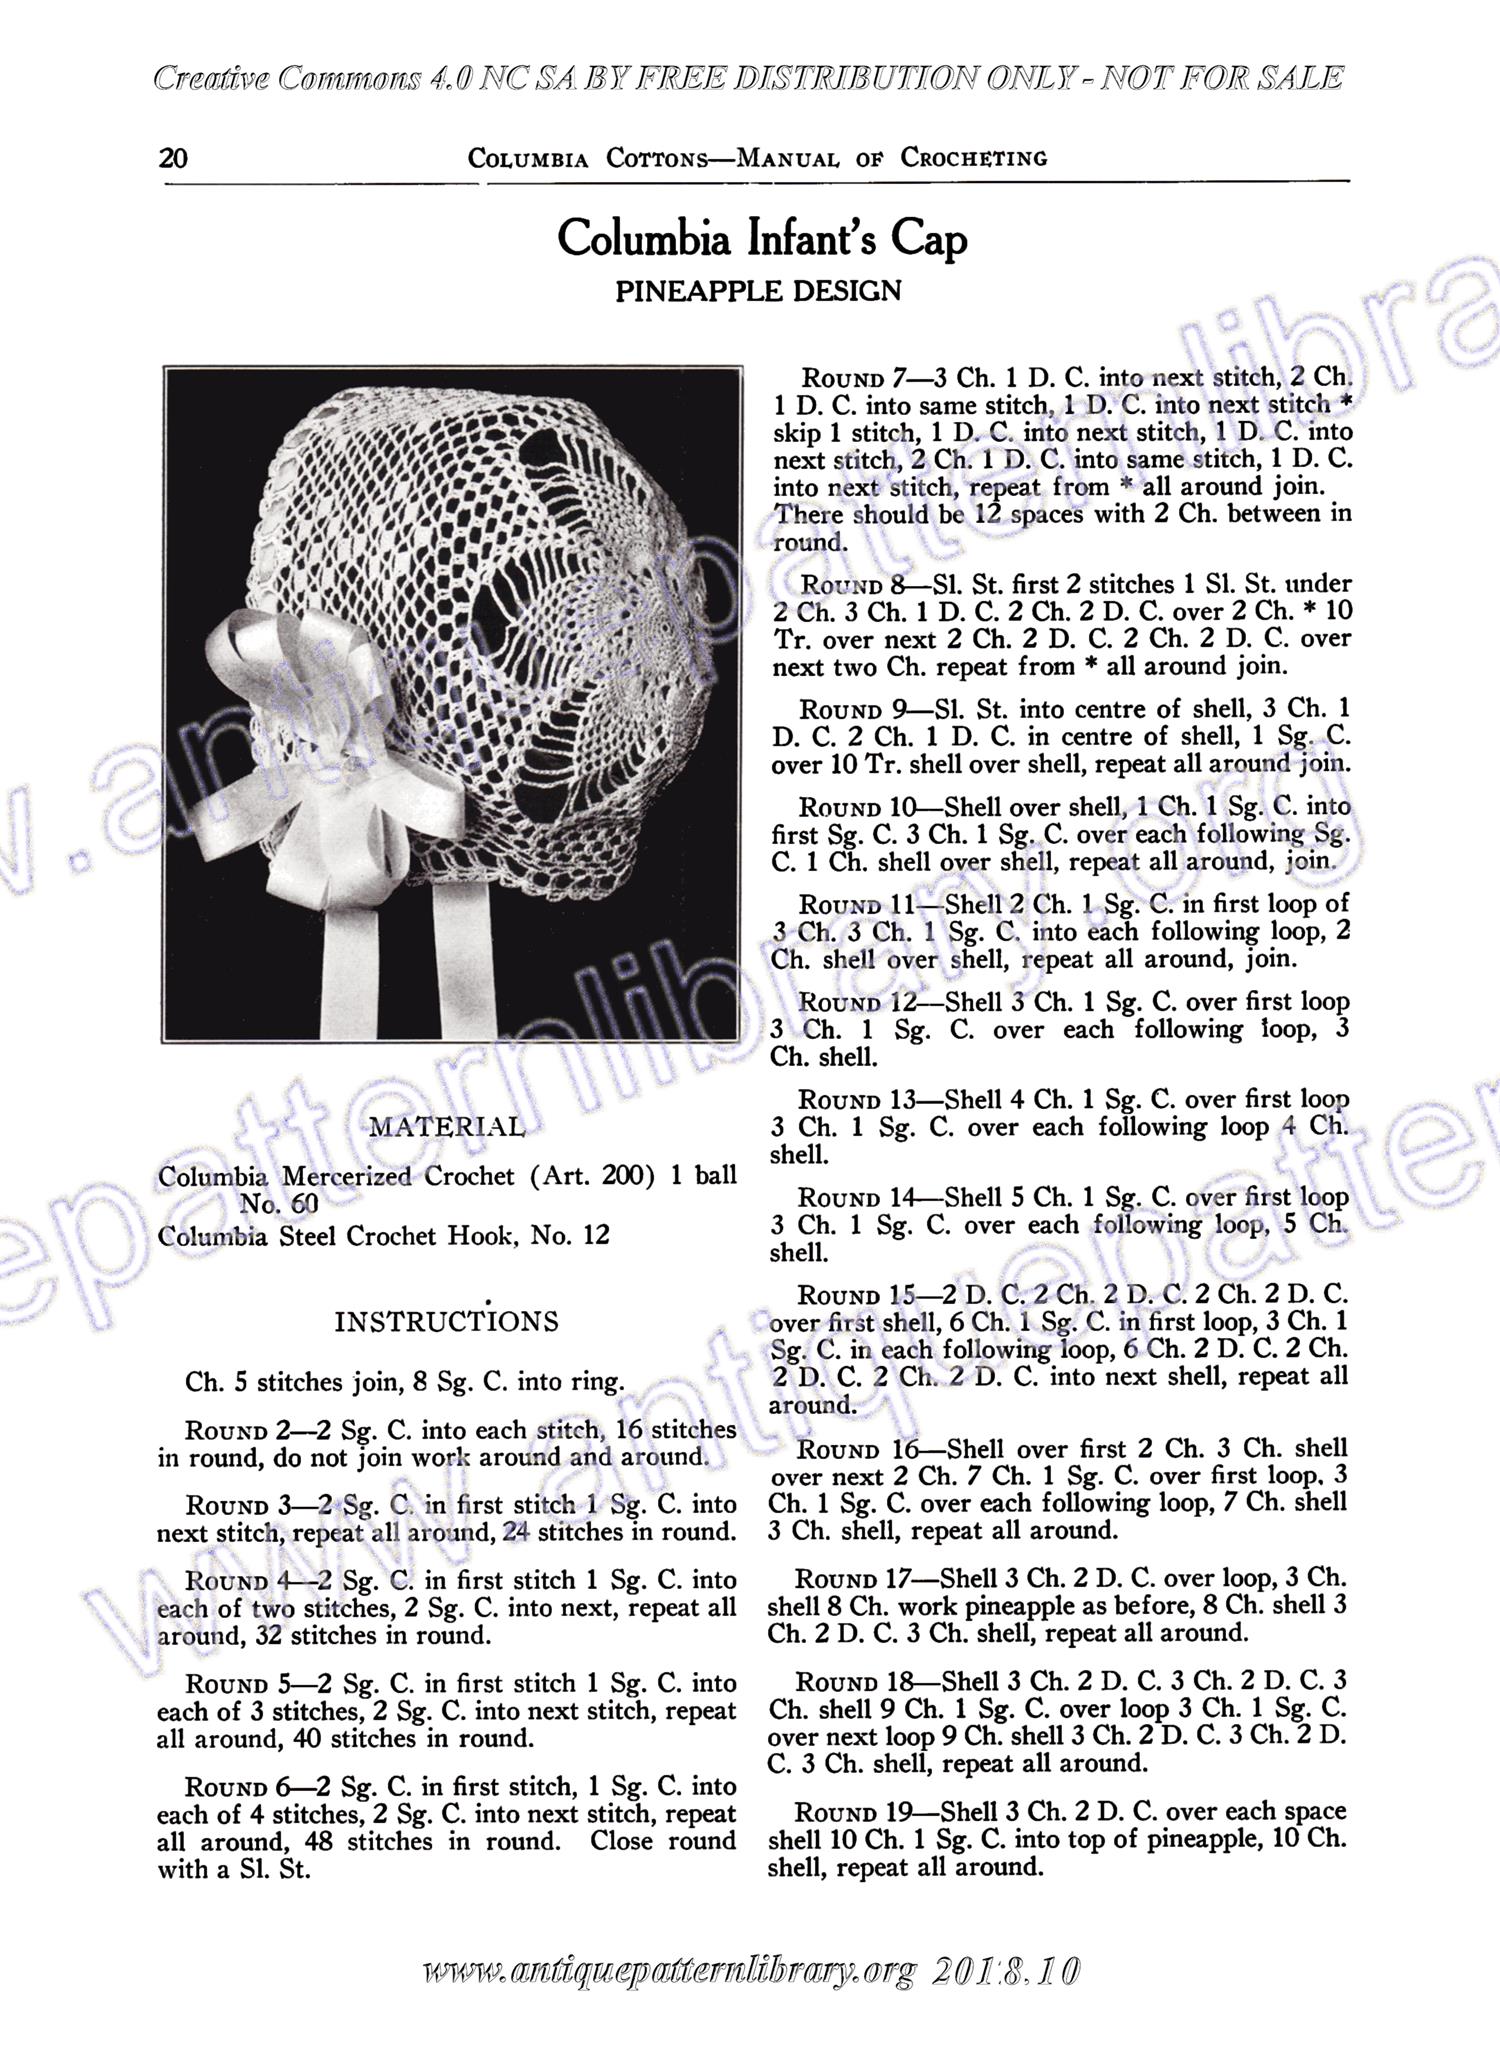 I-SB001 Manual of Crocheting Infant's and Children's Caps